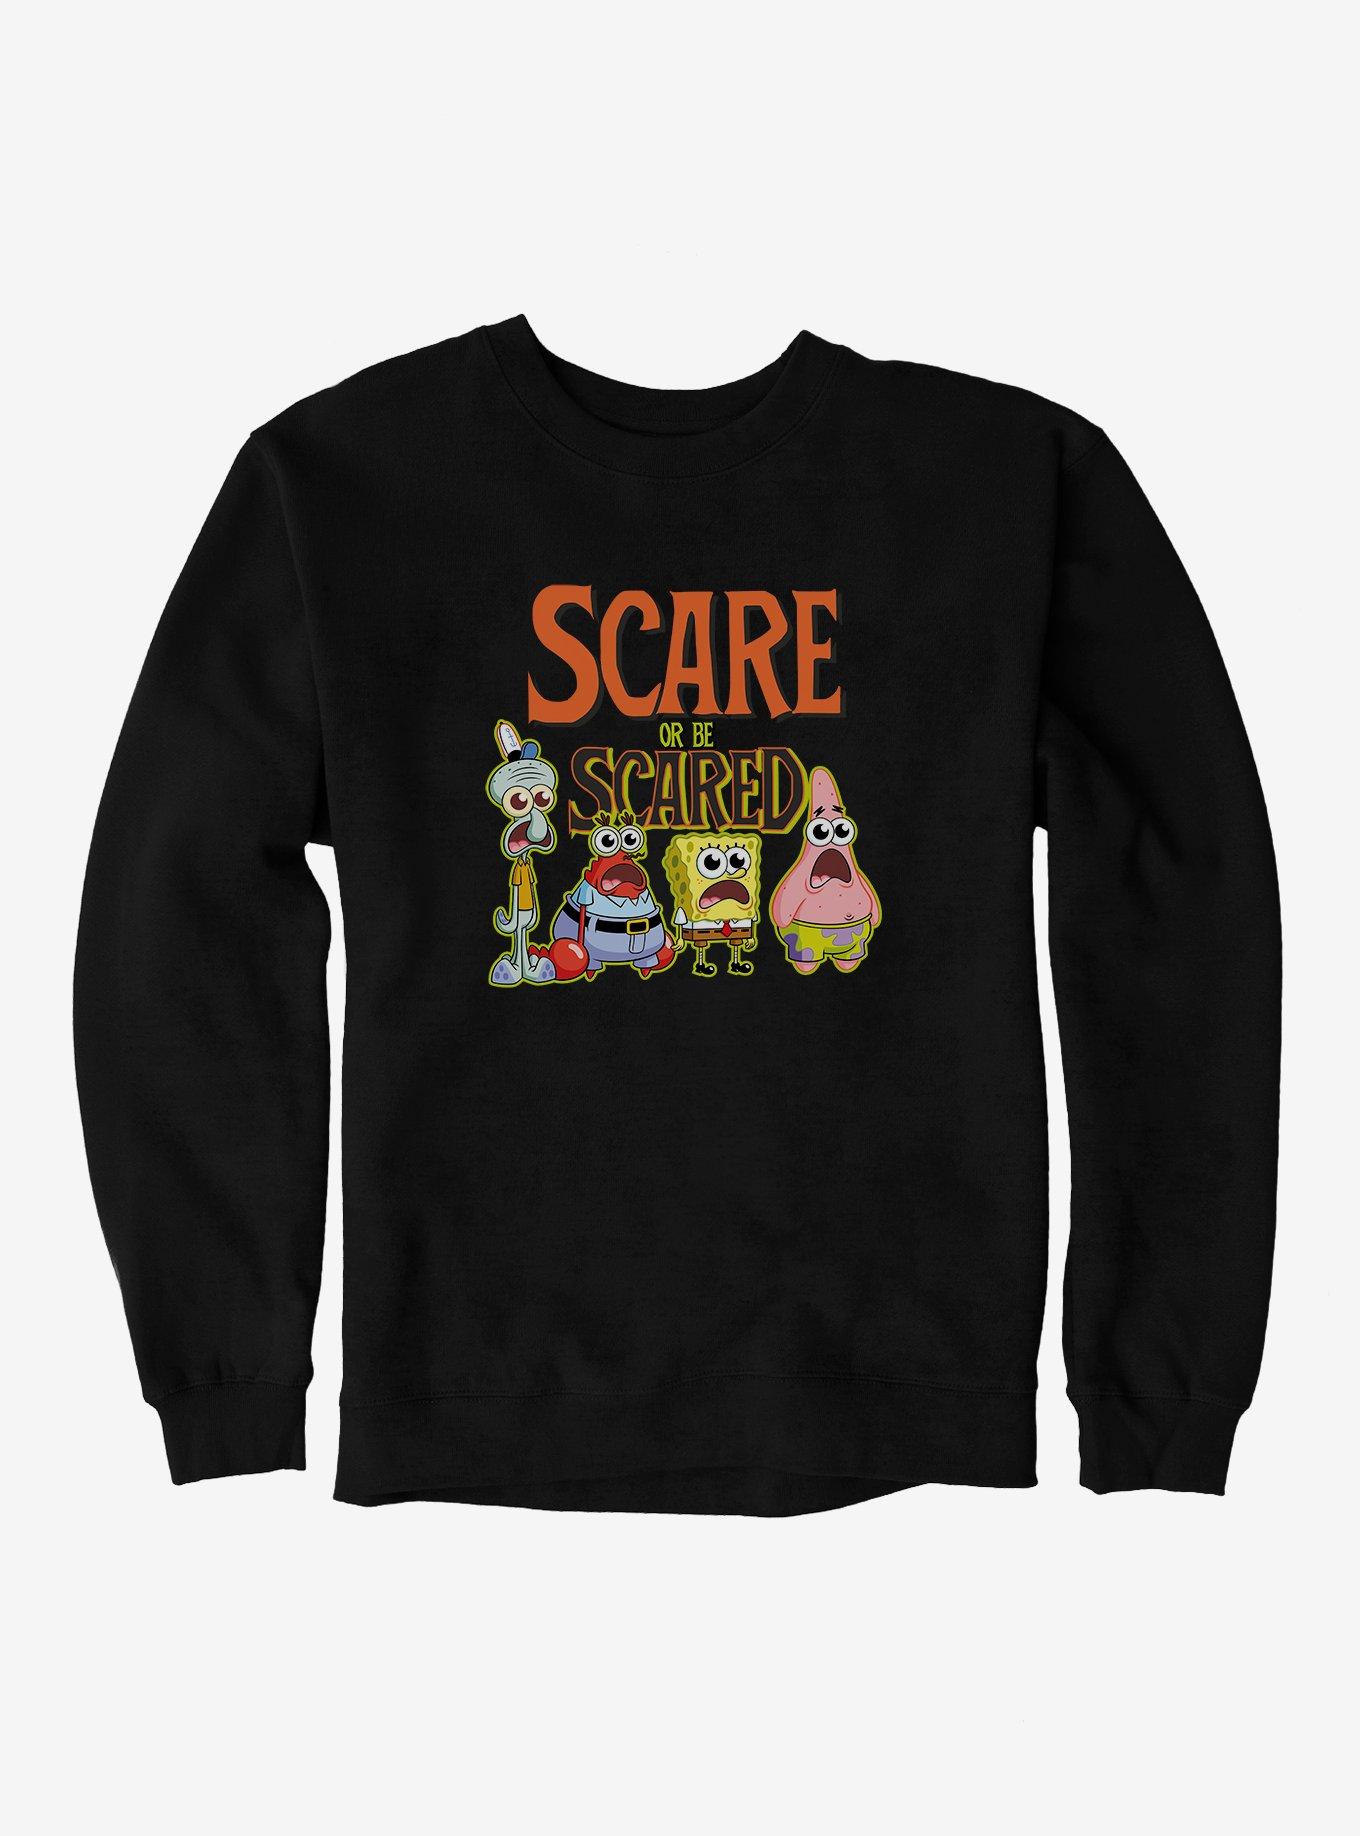 SpongeBob SquarePants Scare Or Be Scared Sweatshirt